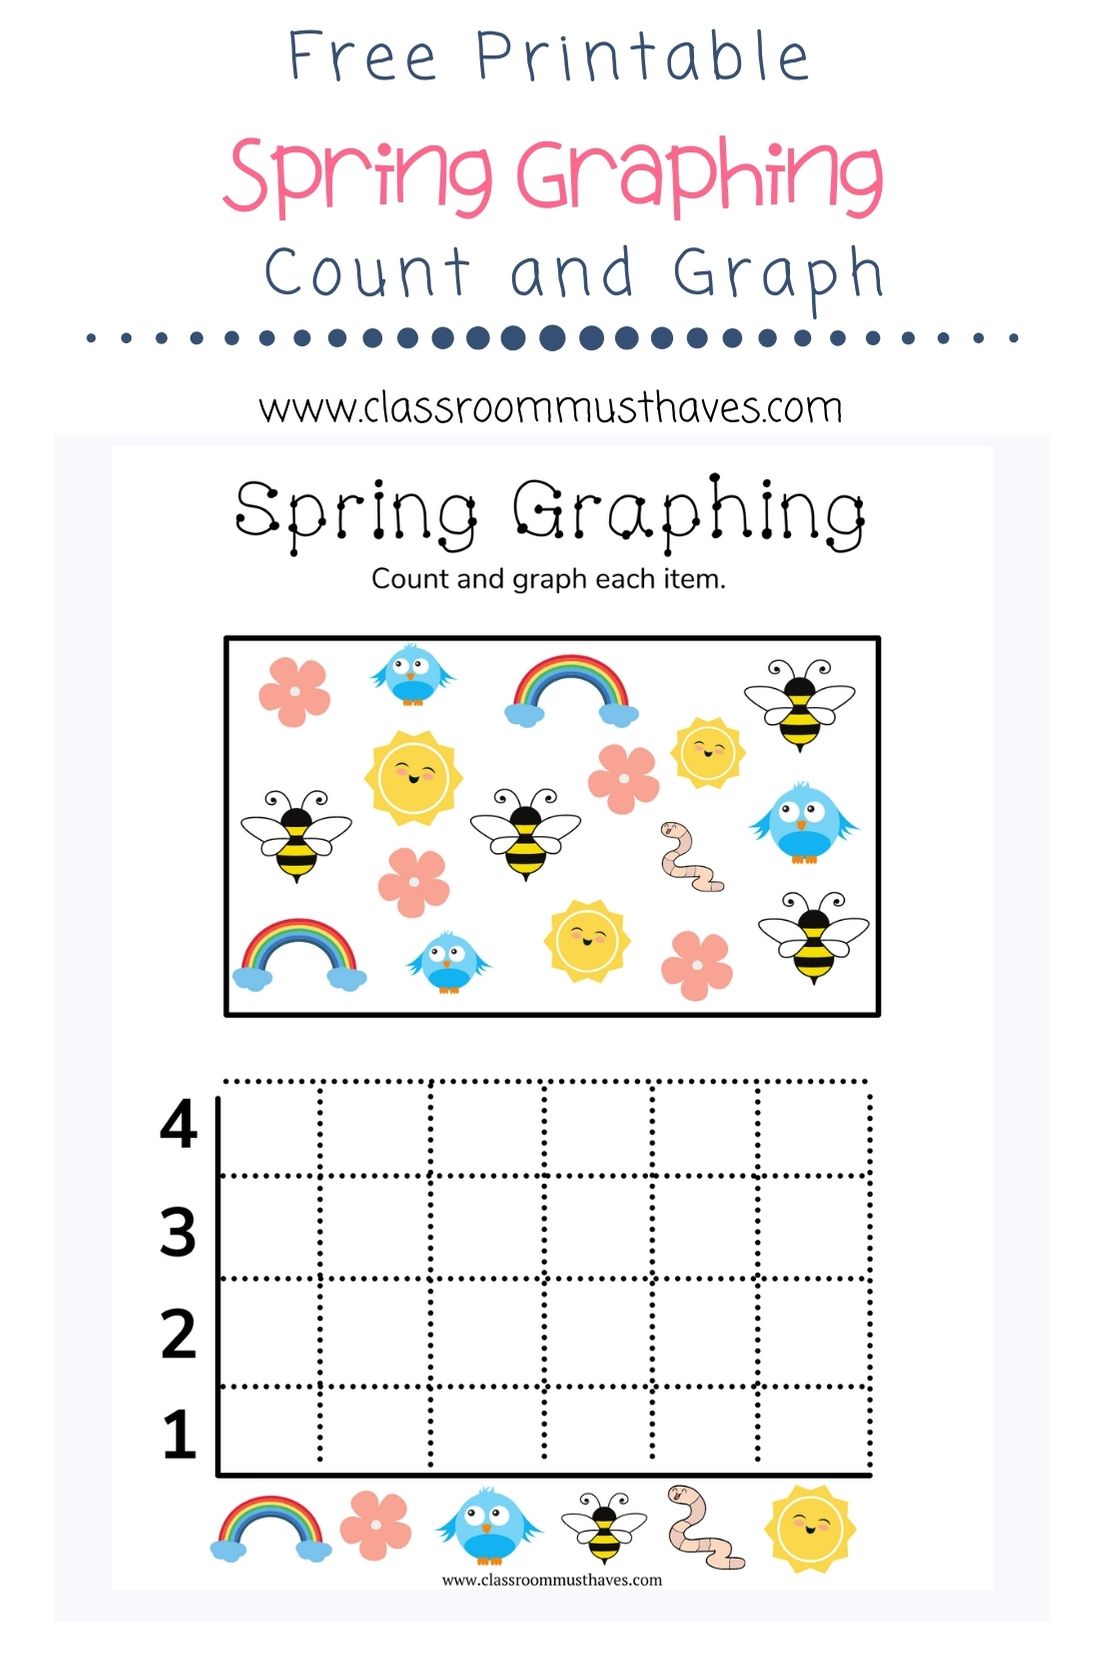 Free Spring Graphic Printable 